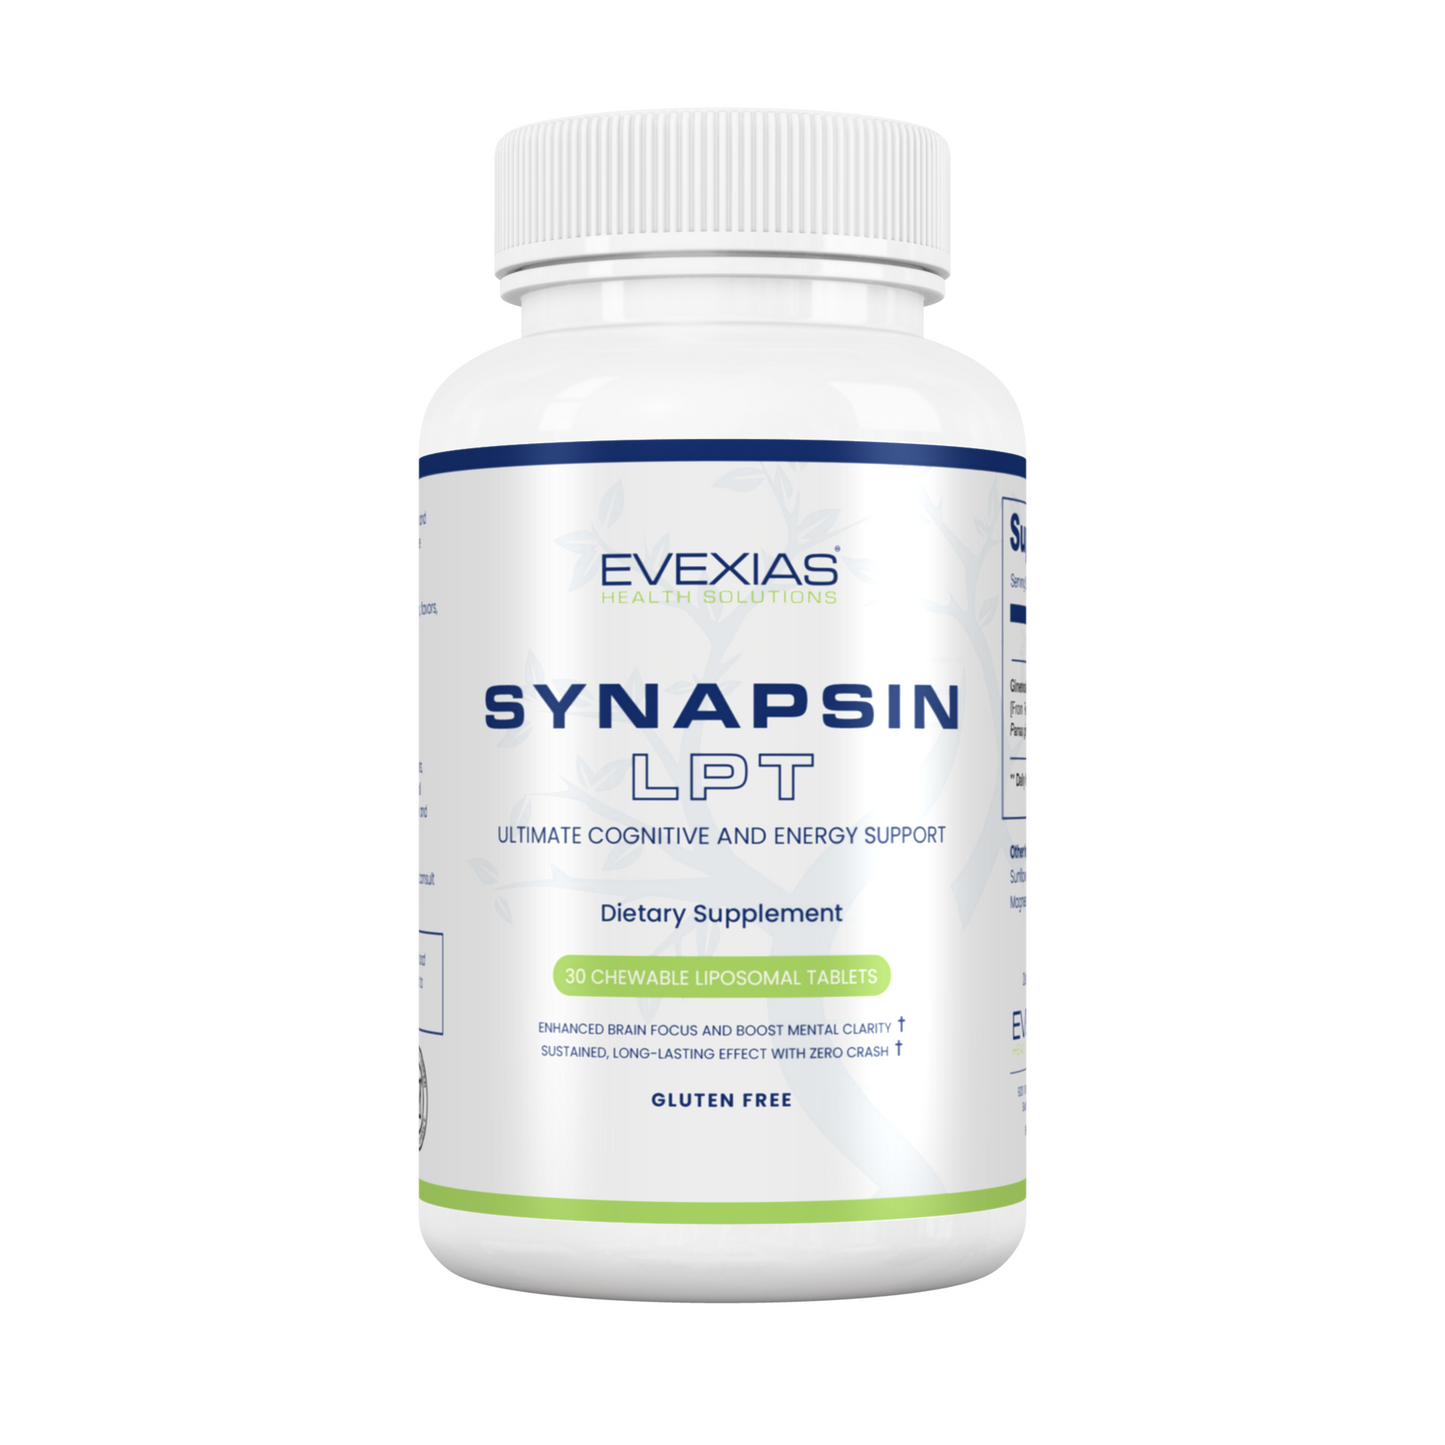 Synapsin LPT Supplement